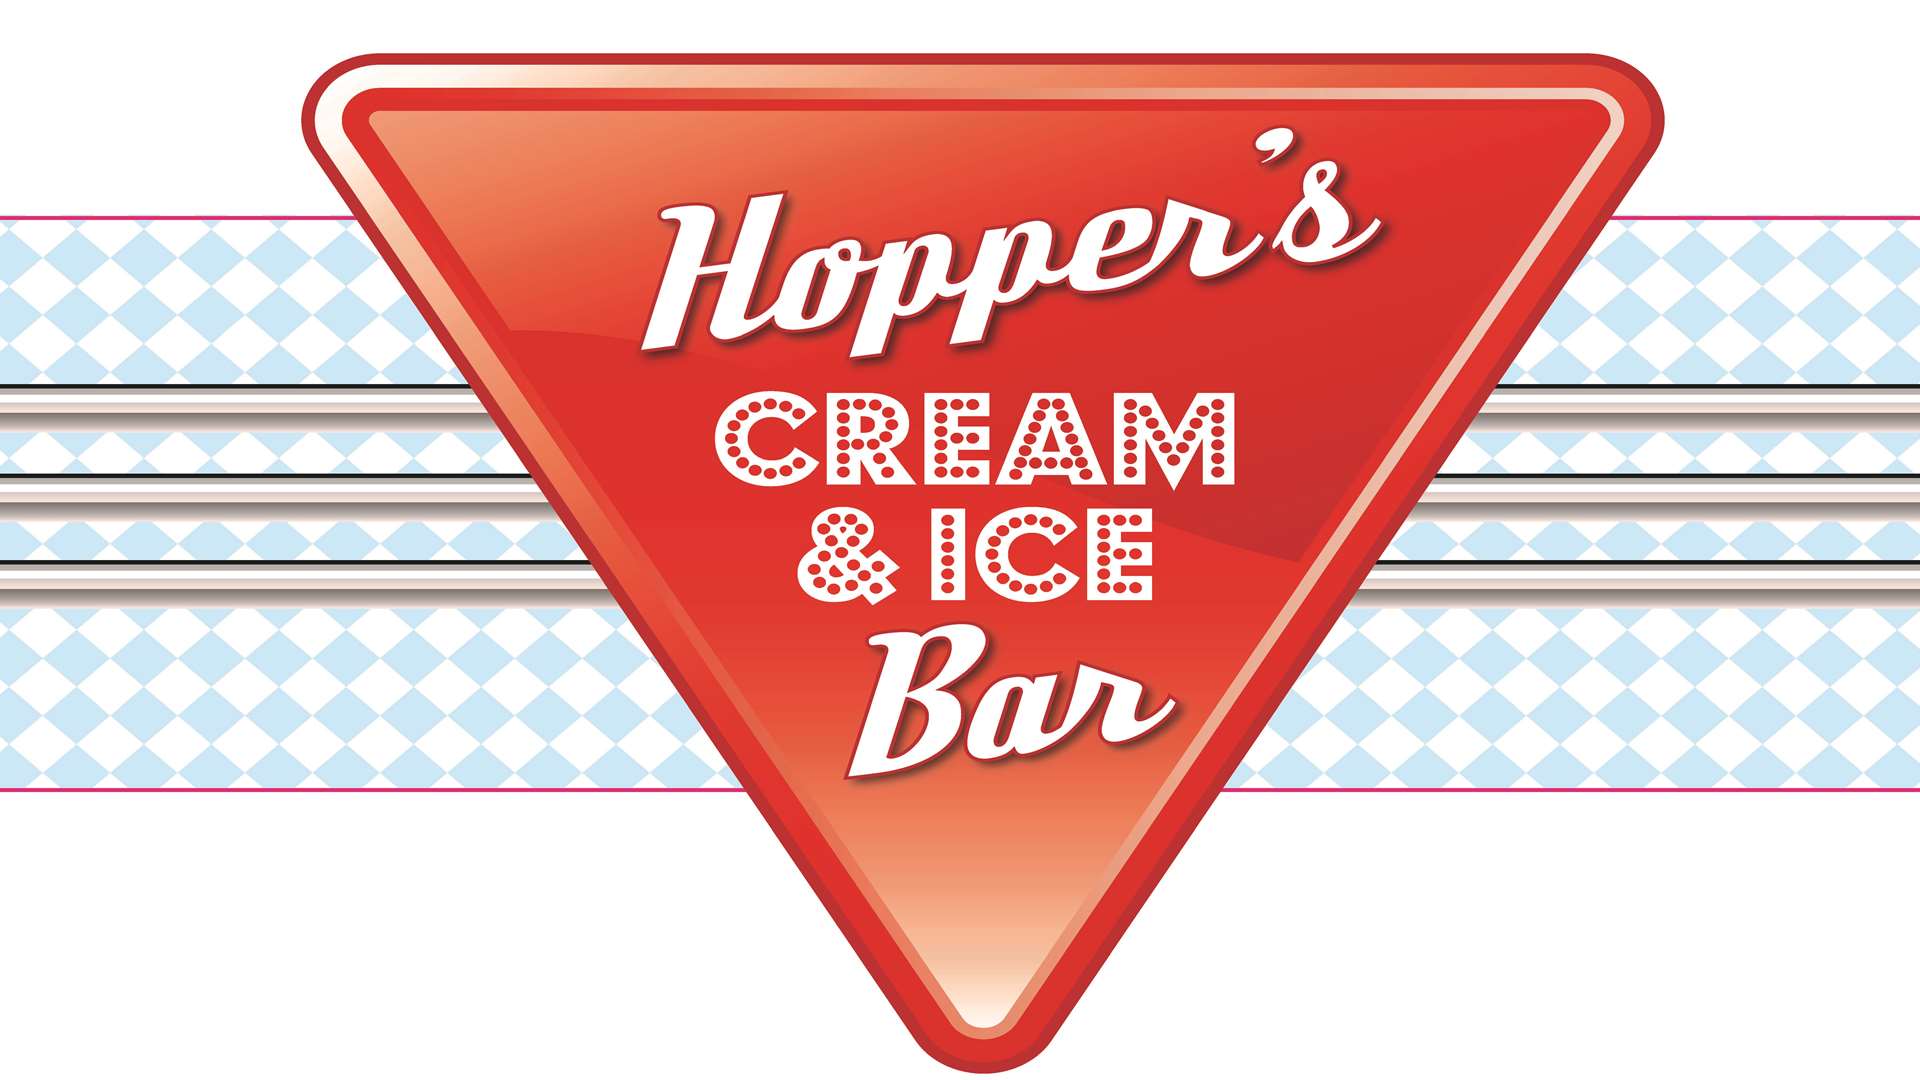 The Hopper's Cream and Ice Bar logo